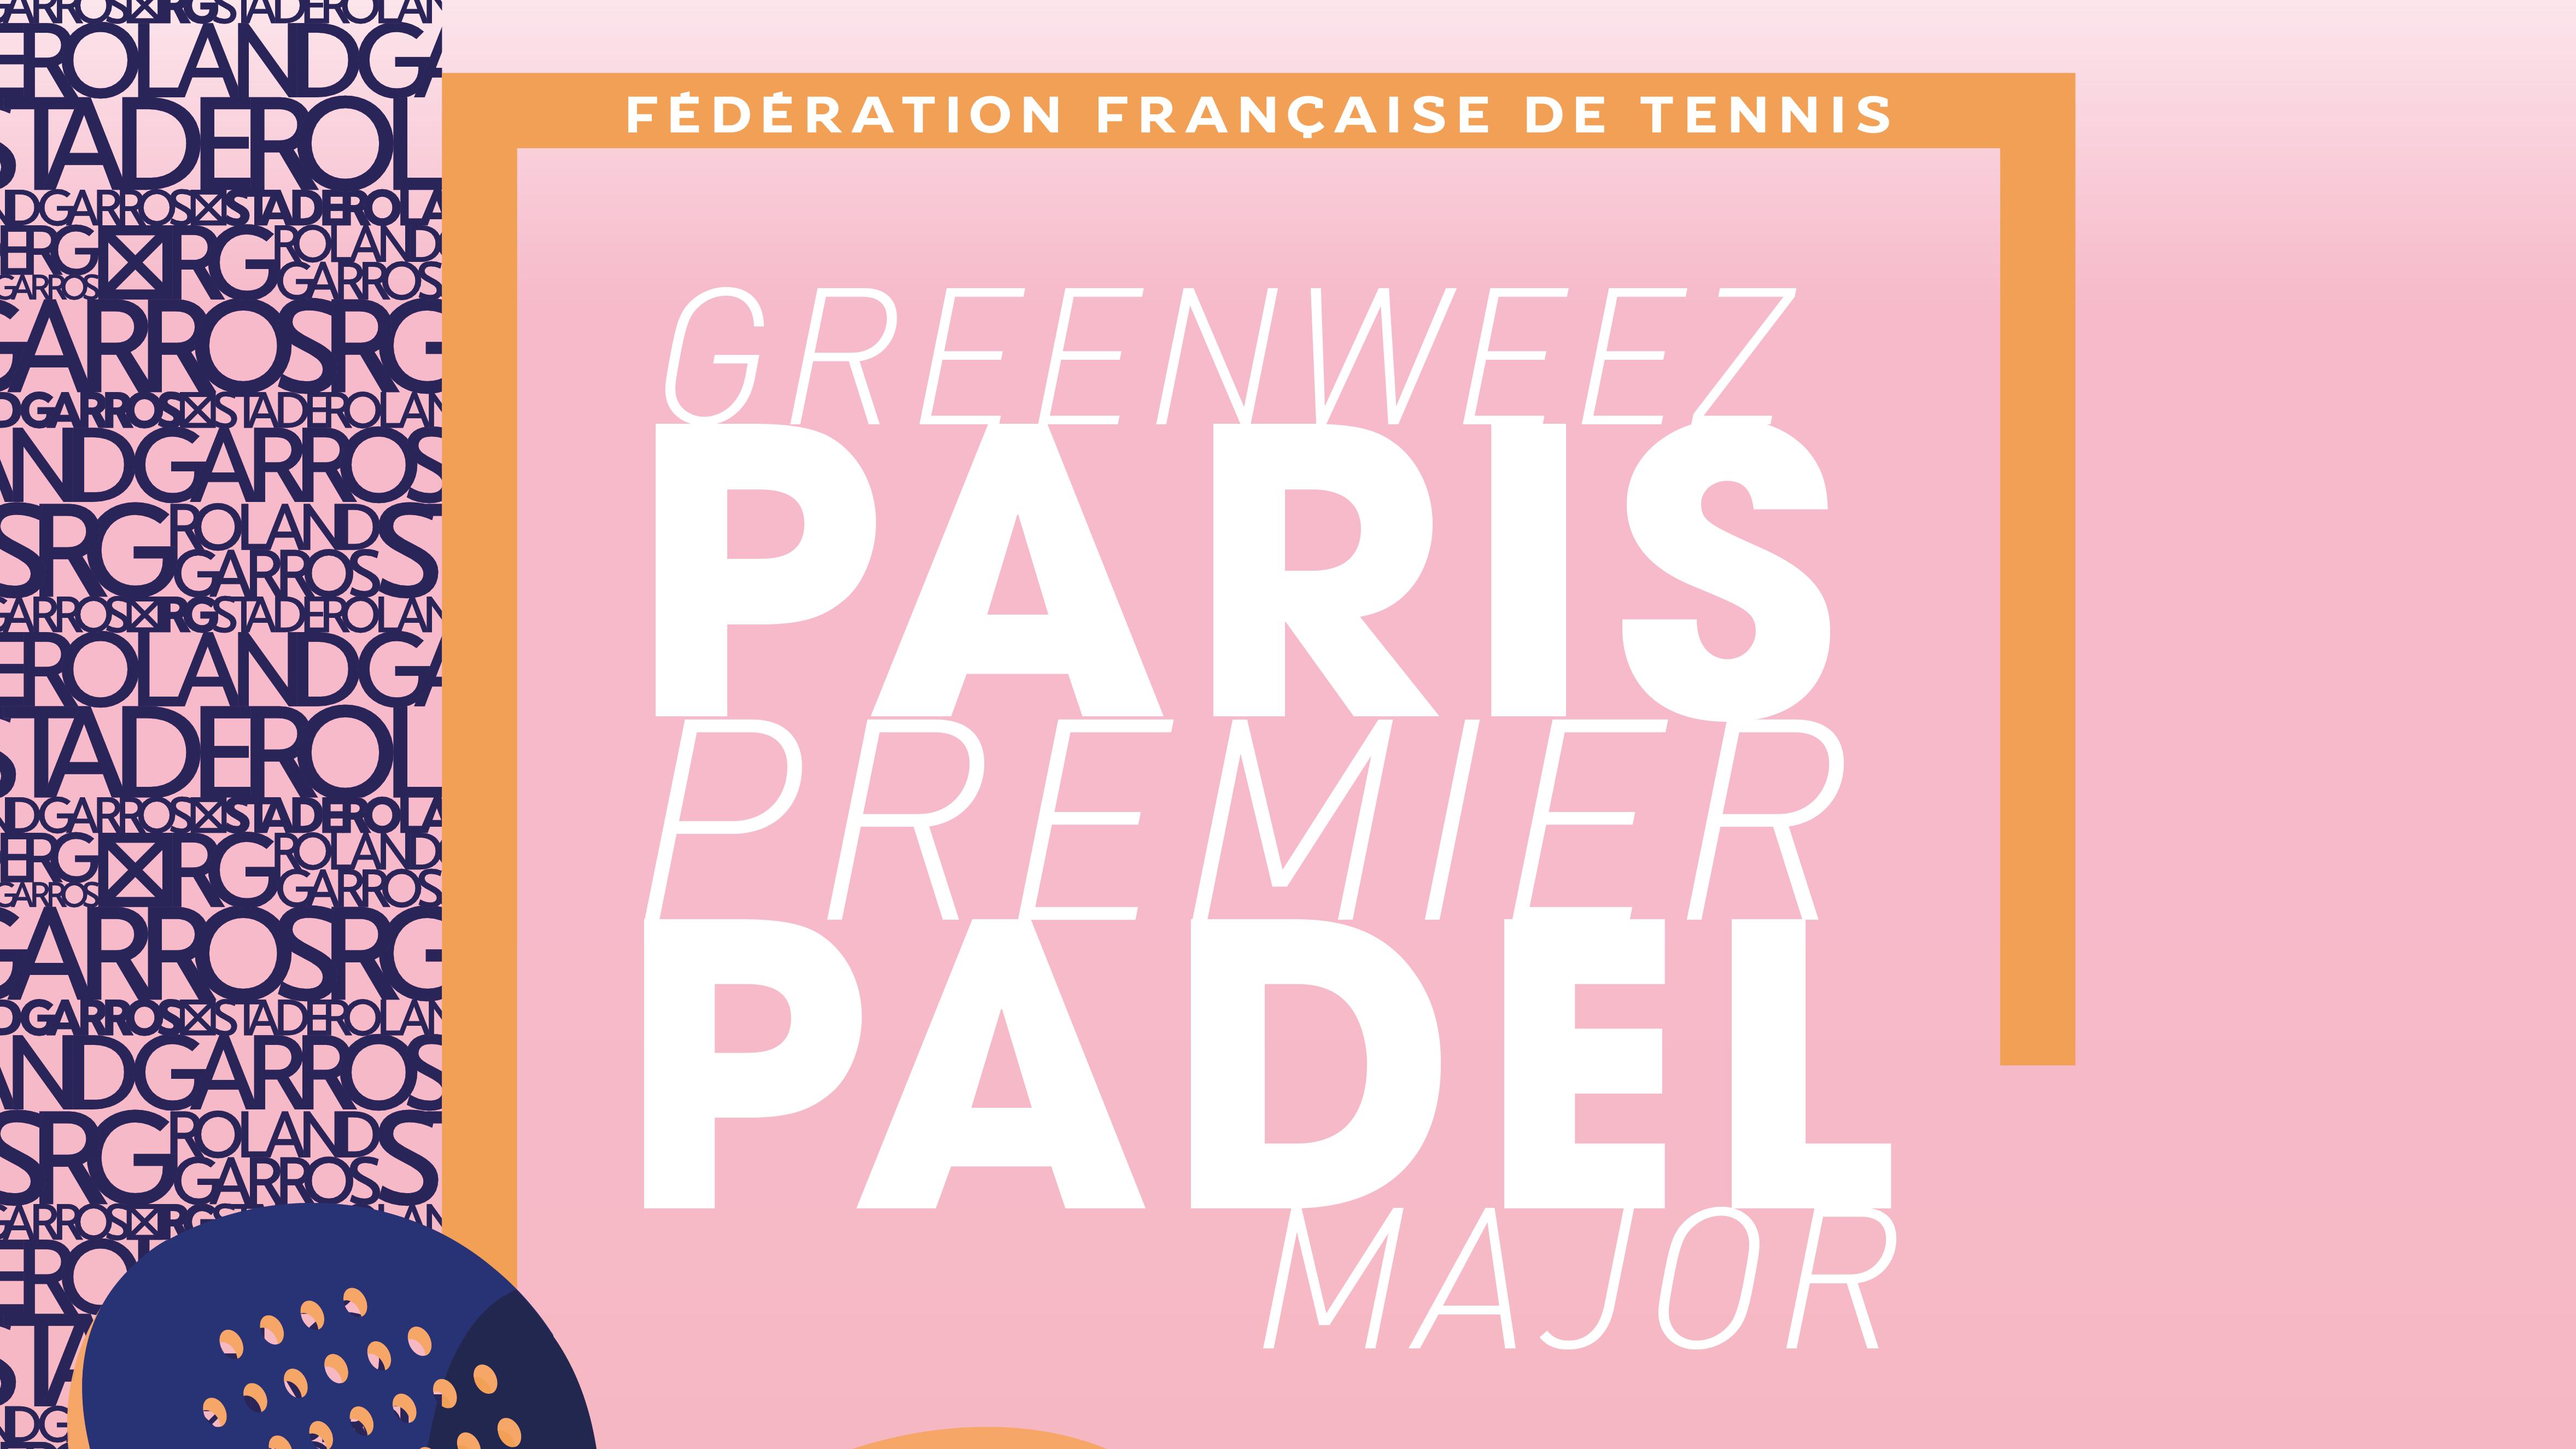 Greenweez Paris Premier Padel Major 